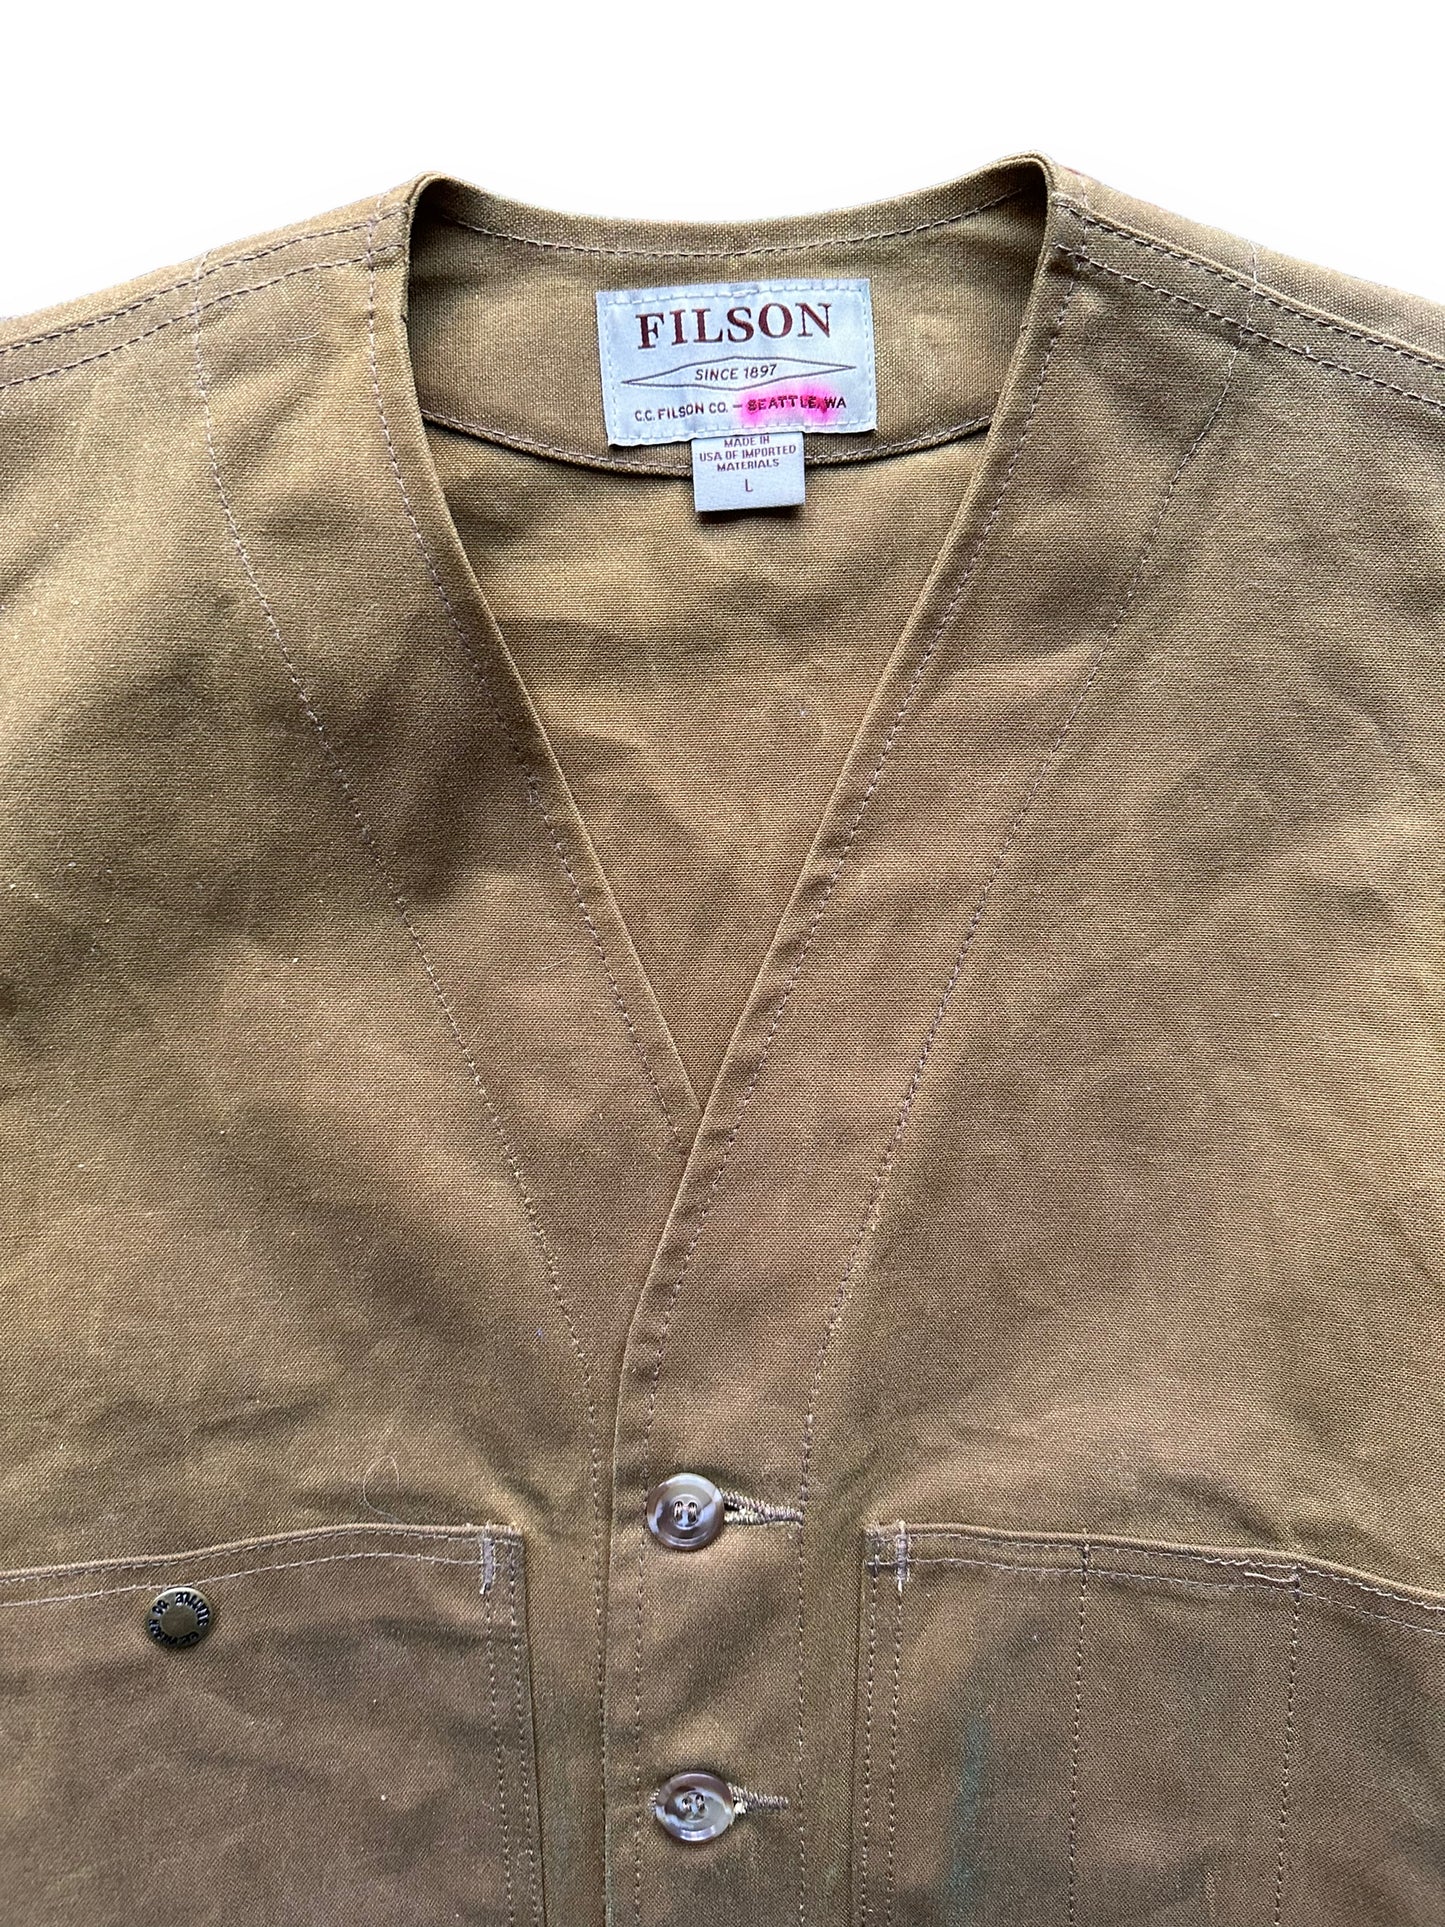 Tag View of Filson Tin Cloth Vest SZ L | Filson Bargain Outlet Seattle | Barn Owl Vintage